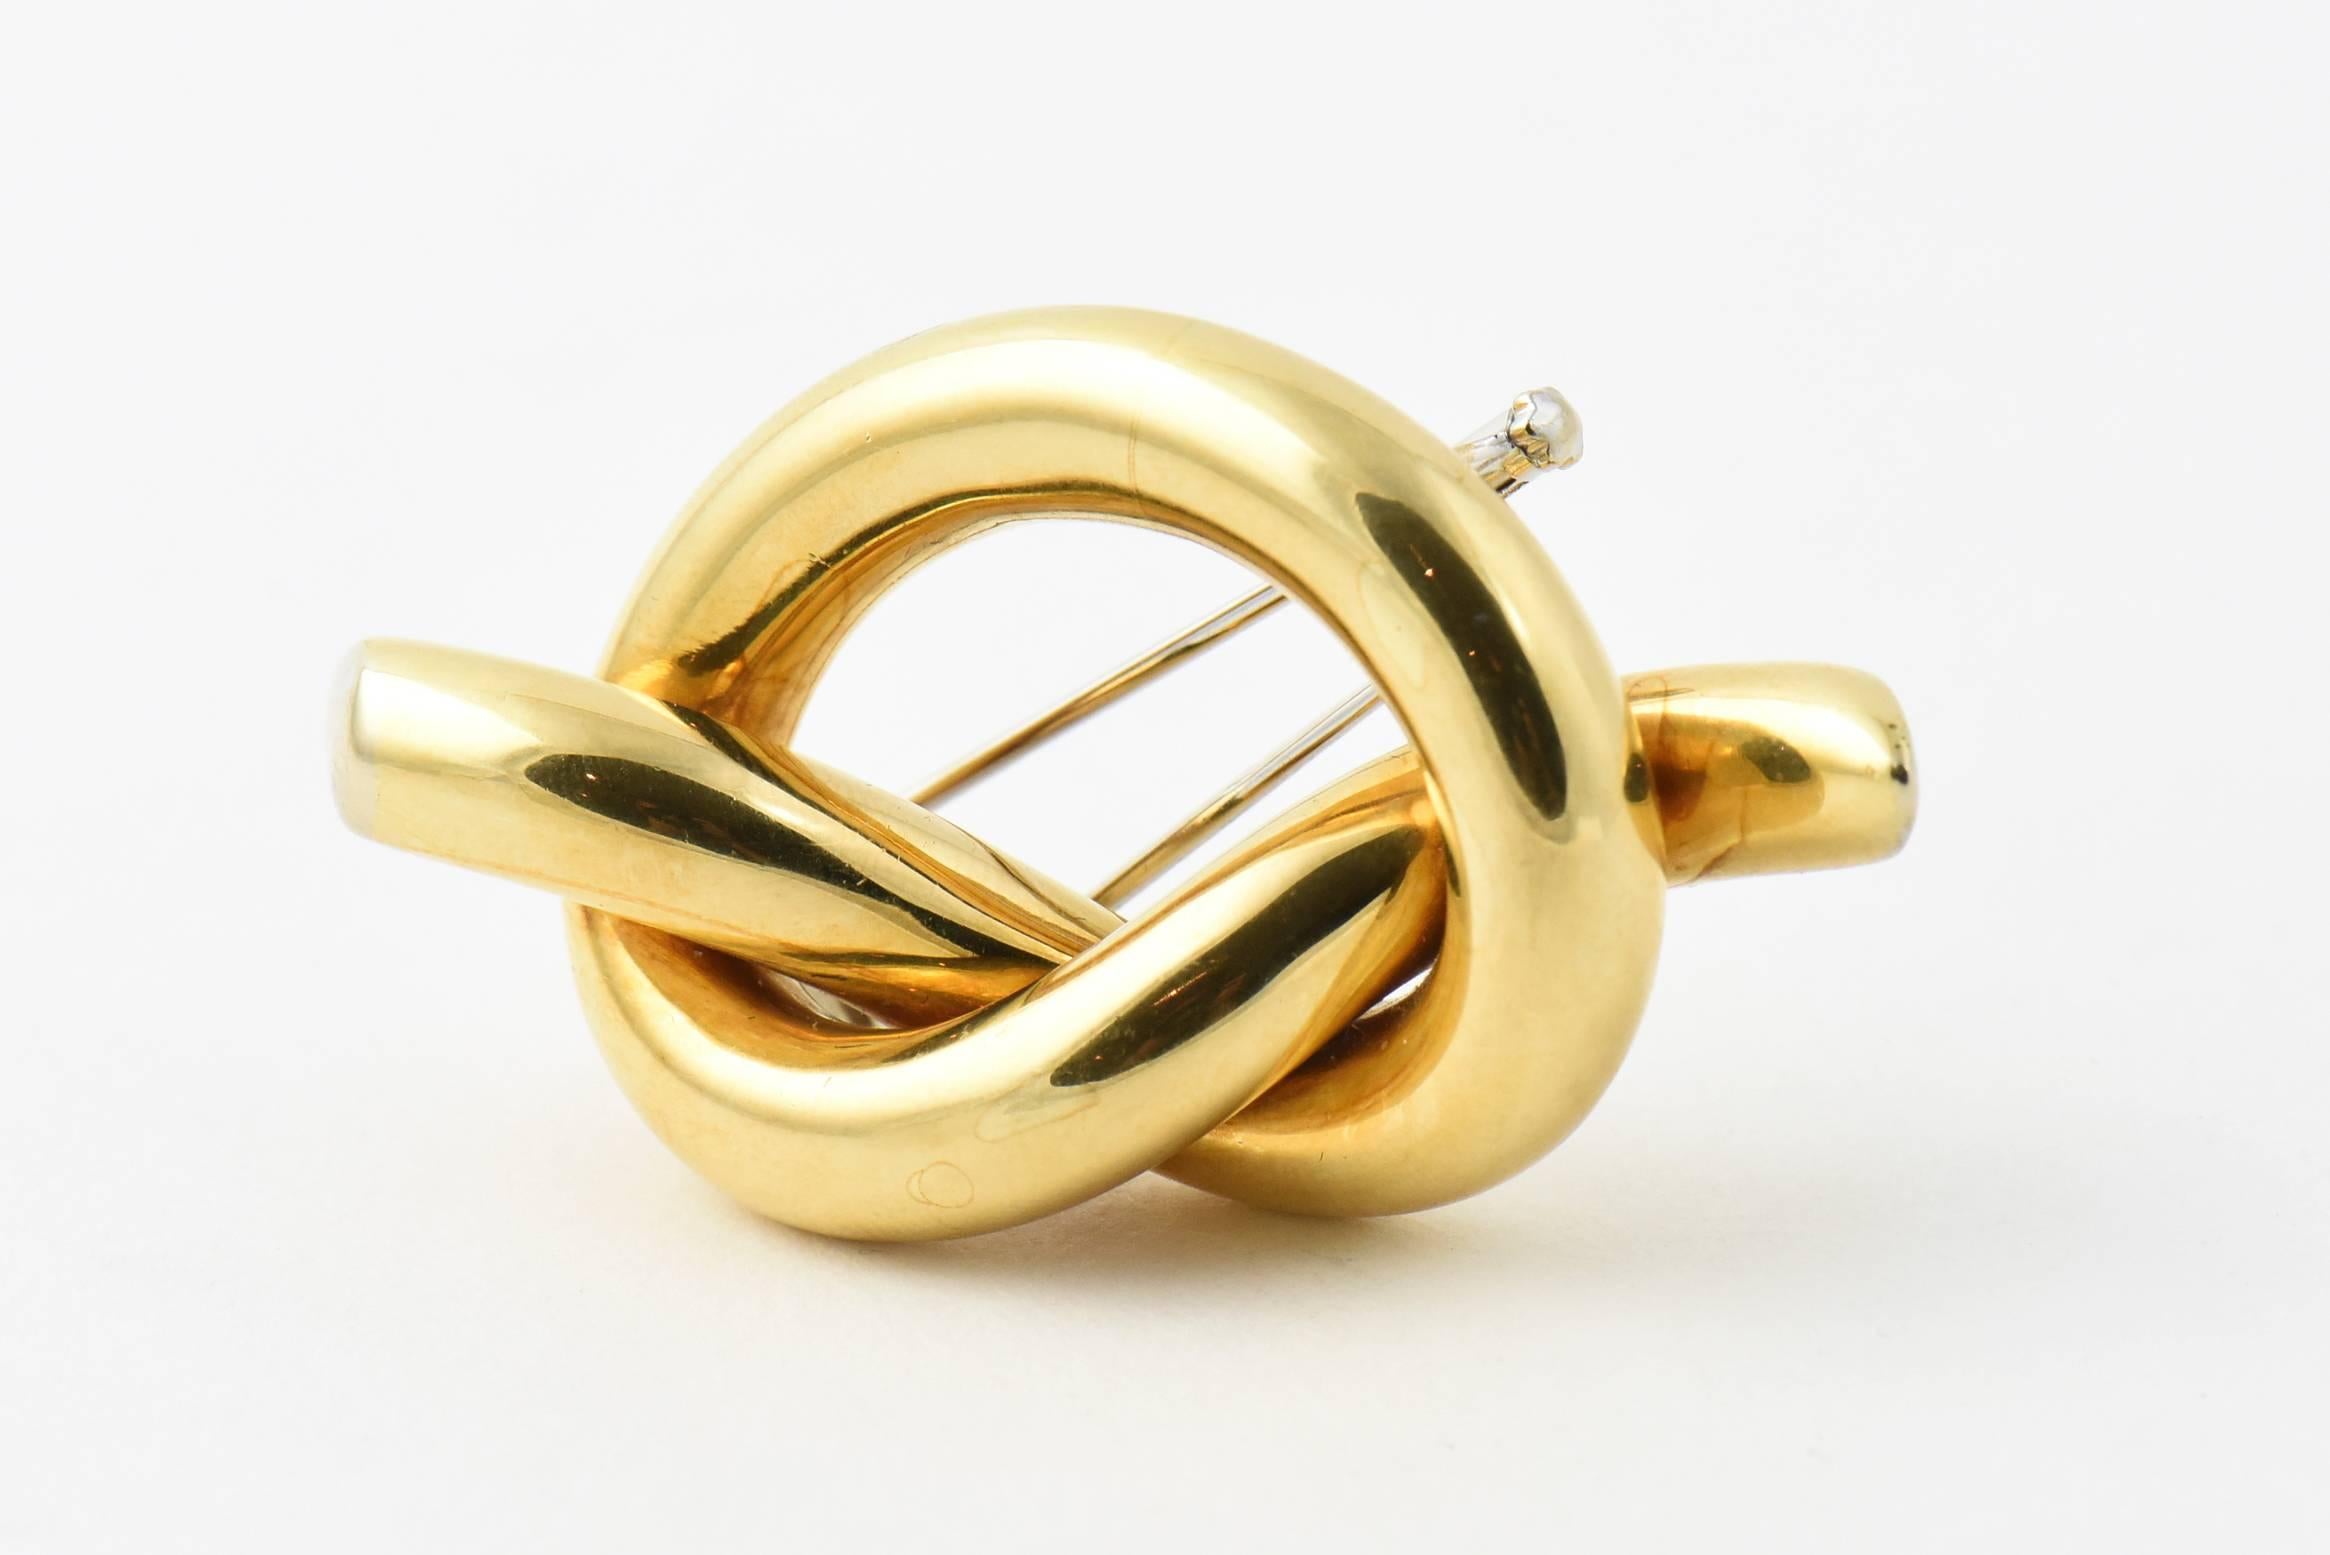 Italian Shiny Finish Mariner Knot Gold Brooch or Pin 3